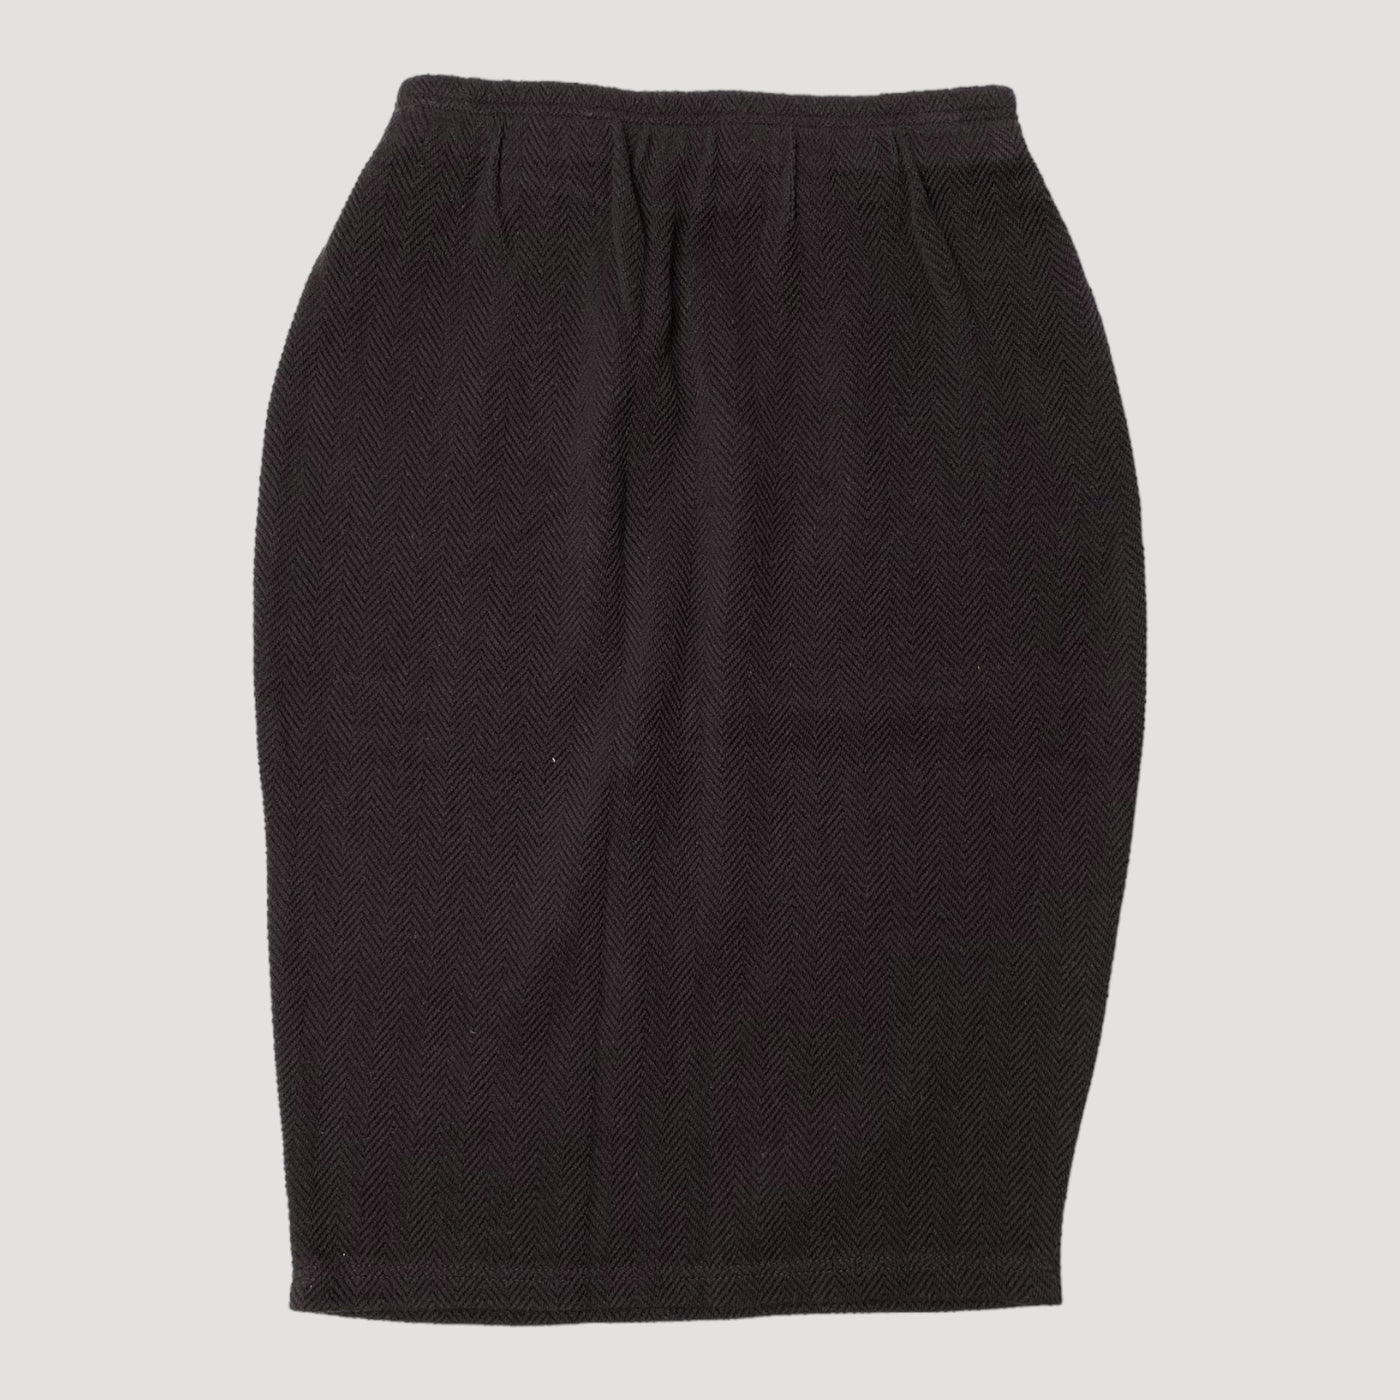 Marimekko skirt, dark coffee | women S